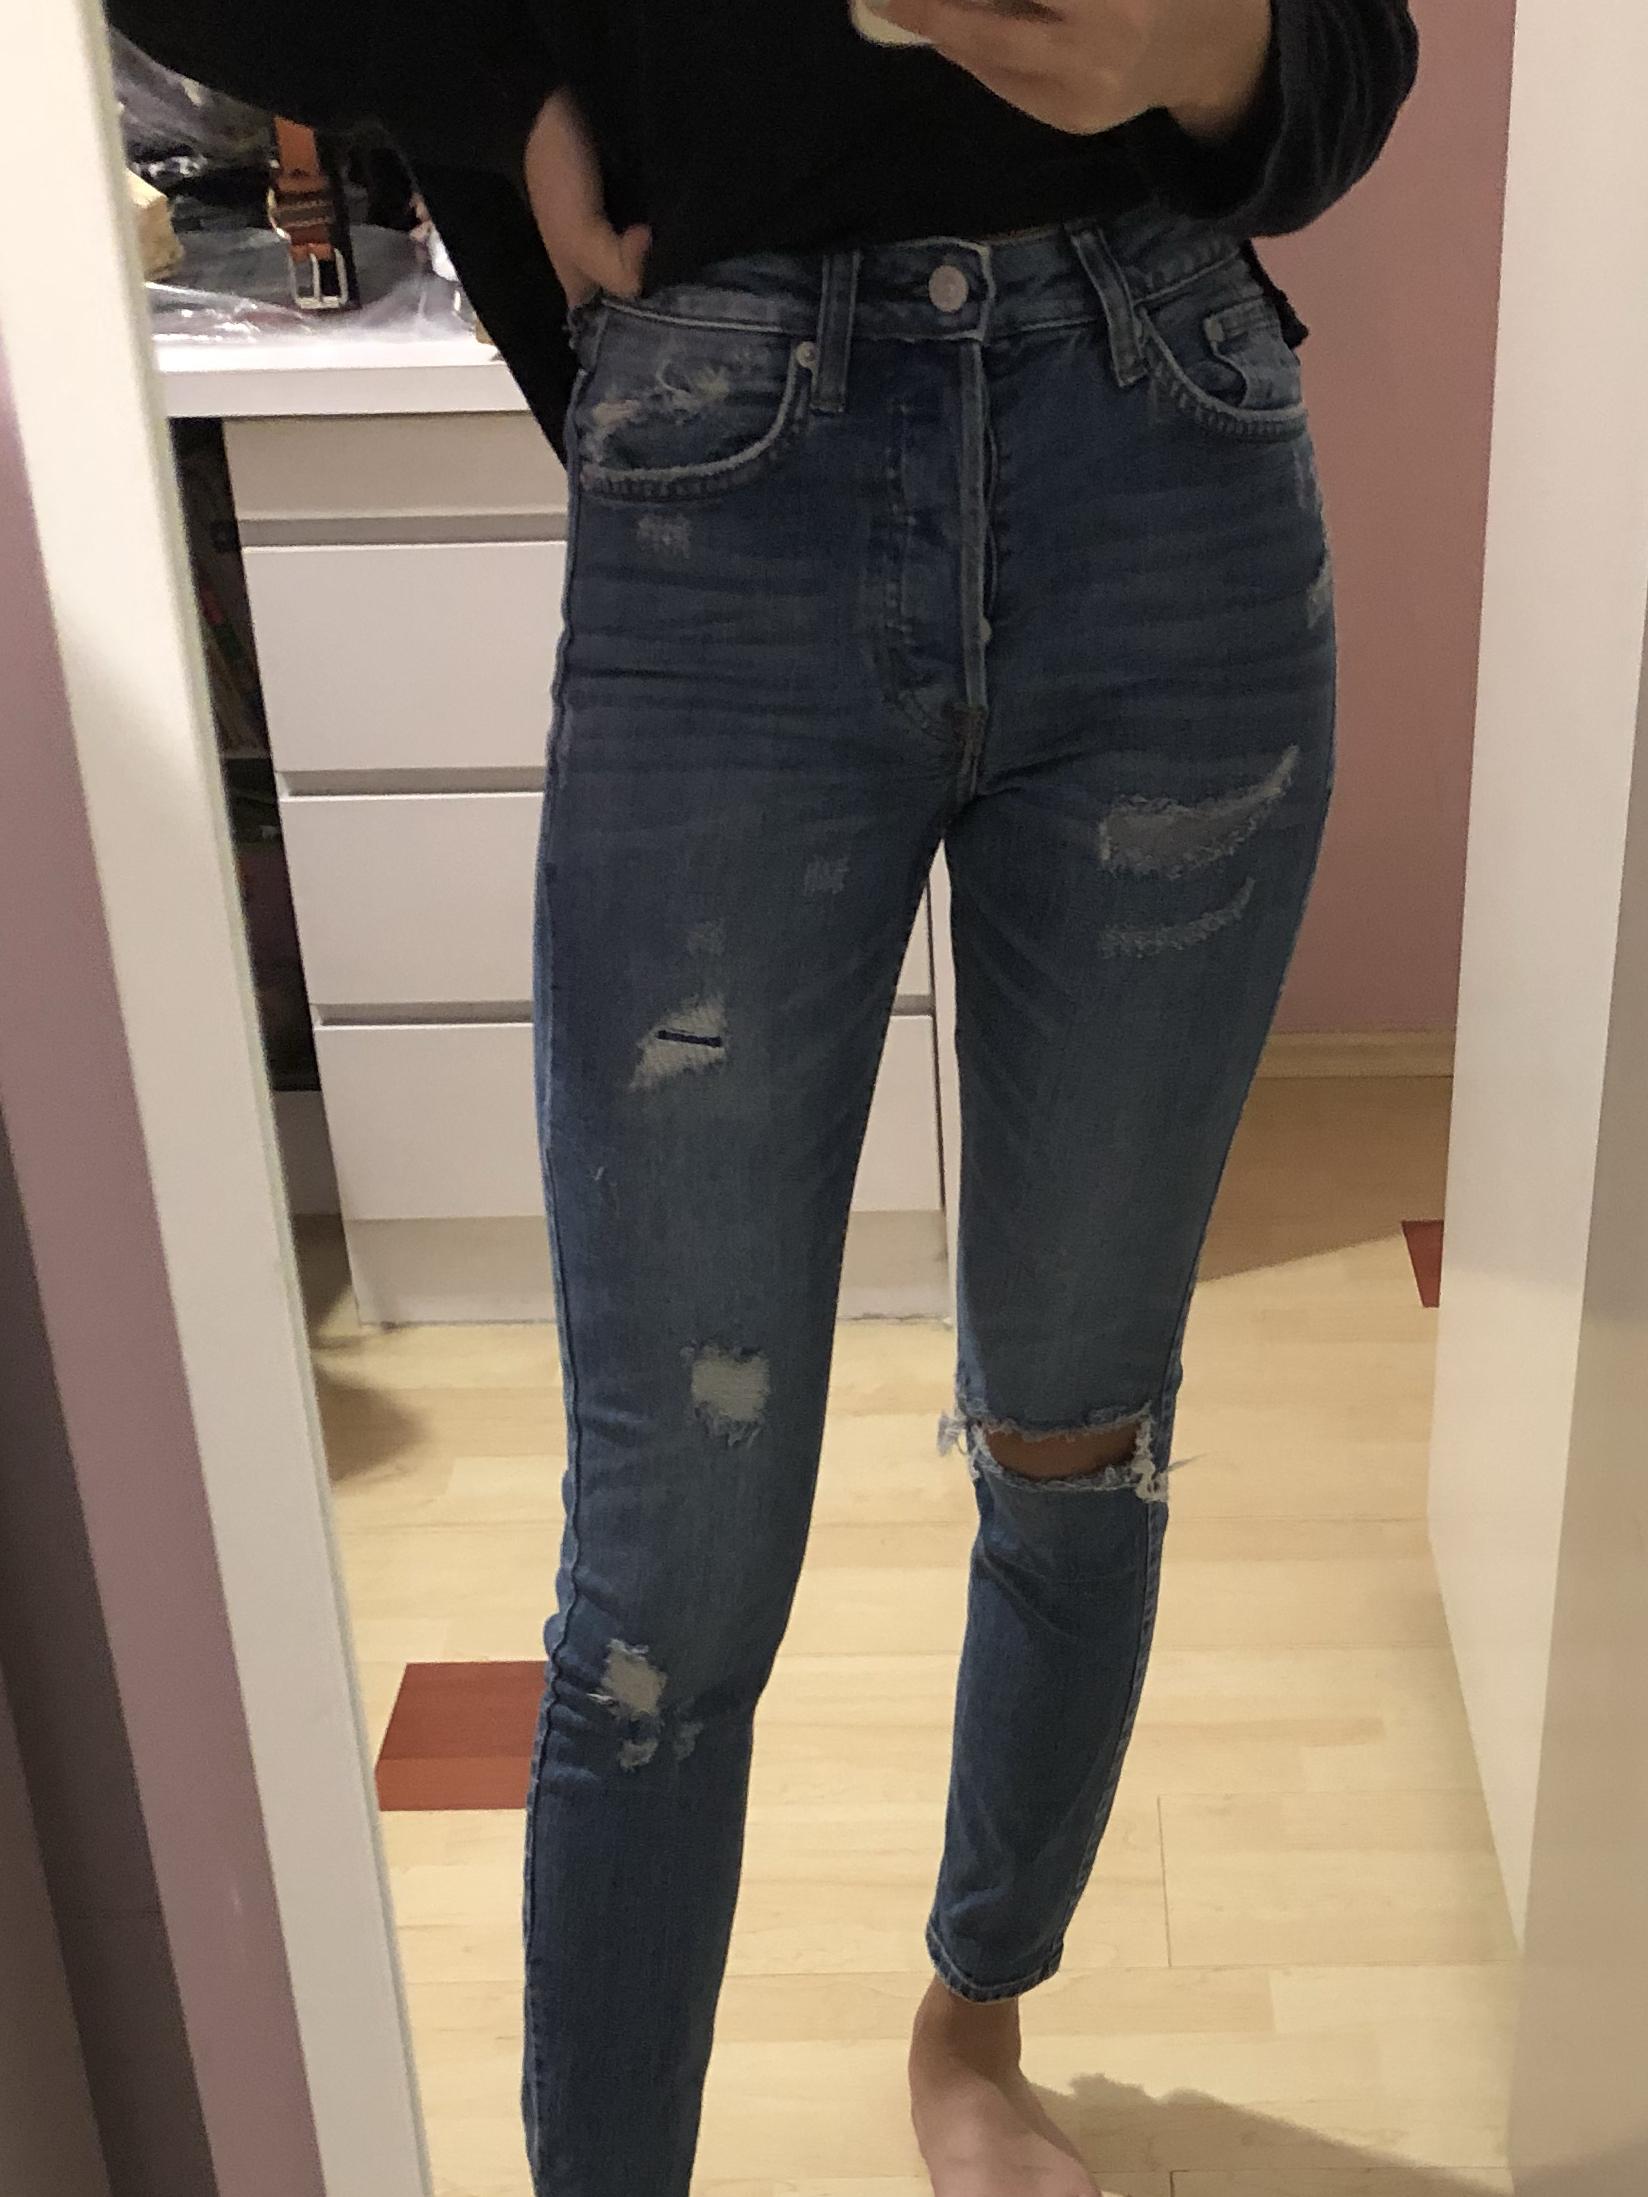 h&m trashed jeans